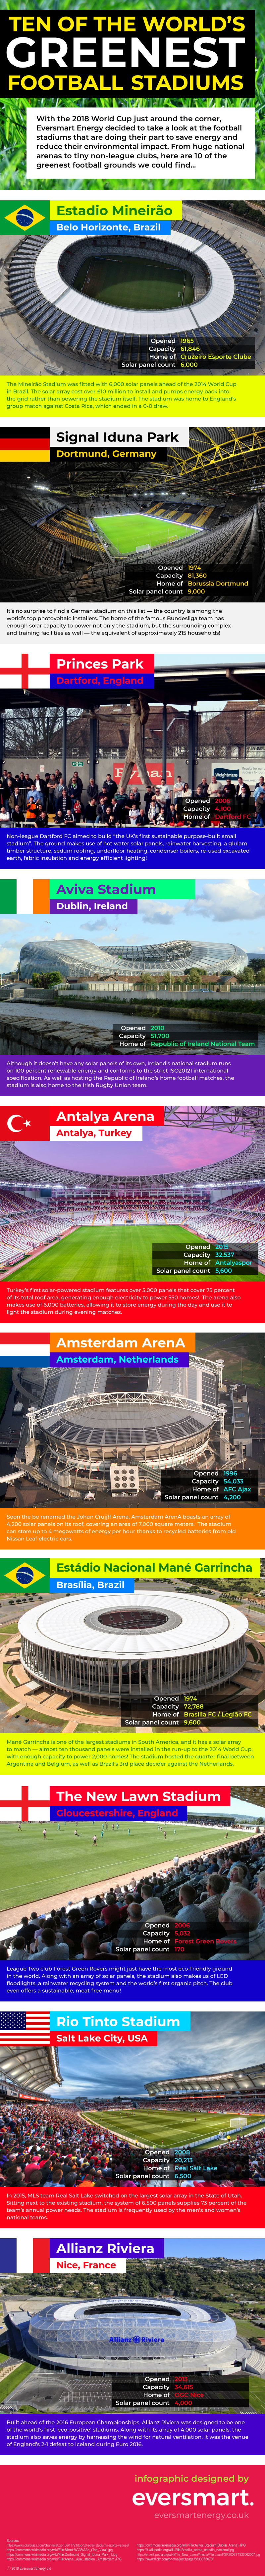 Eco-friendly stadiums